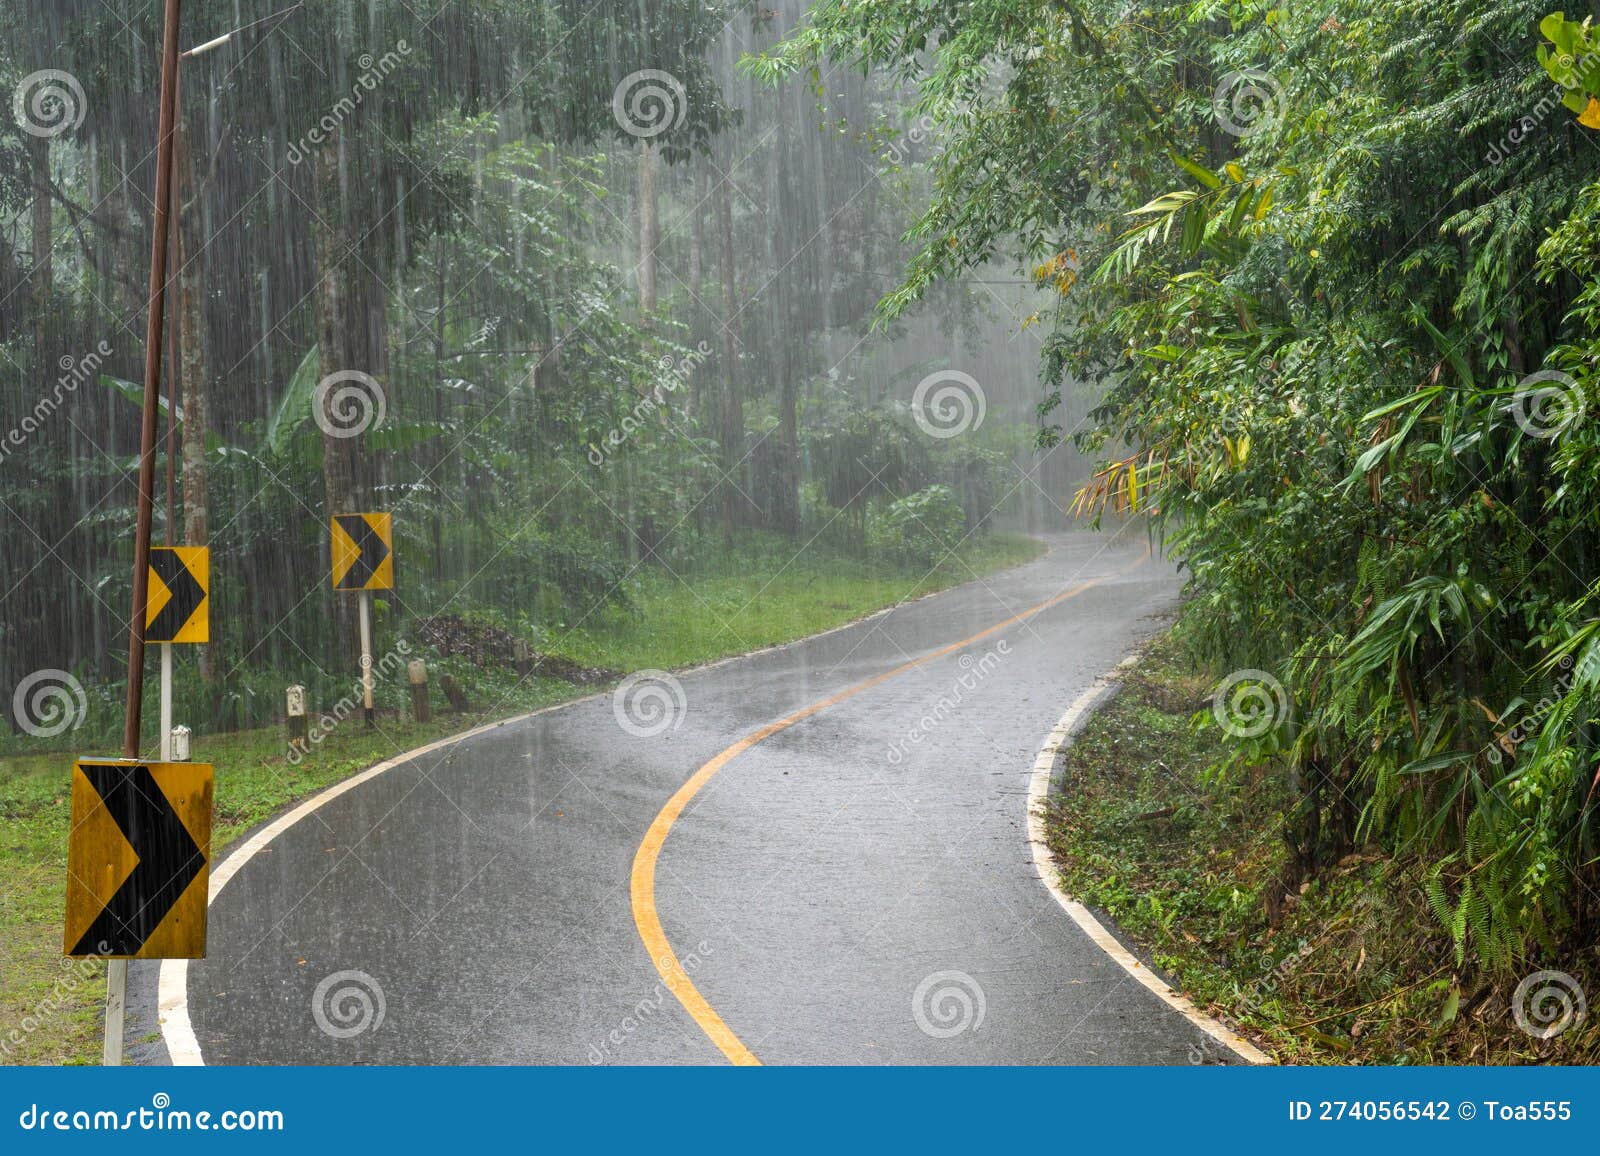 la nina cause a heavy rain in tropical forest